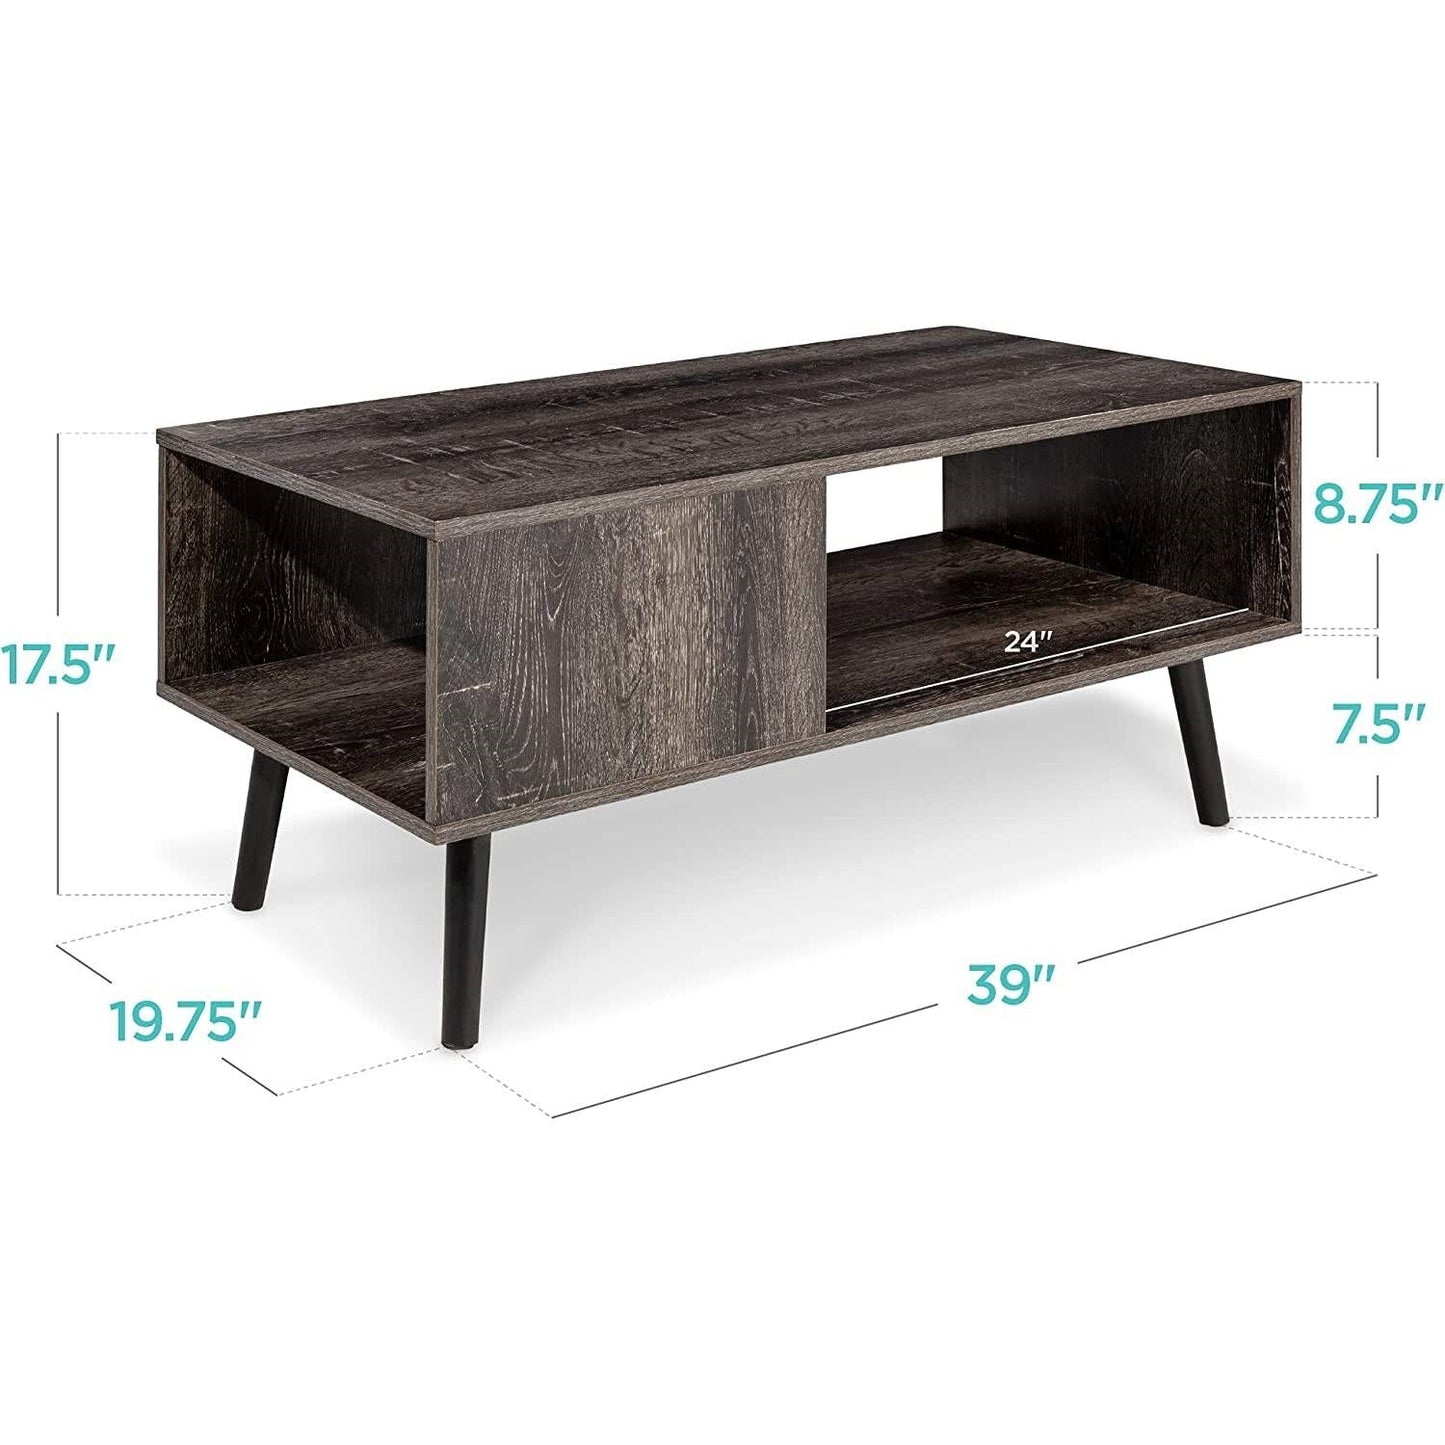 Living Room > Coffee Tables - Modern Mid-Century Coffee Table Living Room Storage Shelf In Rustic Black Wood